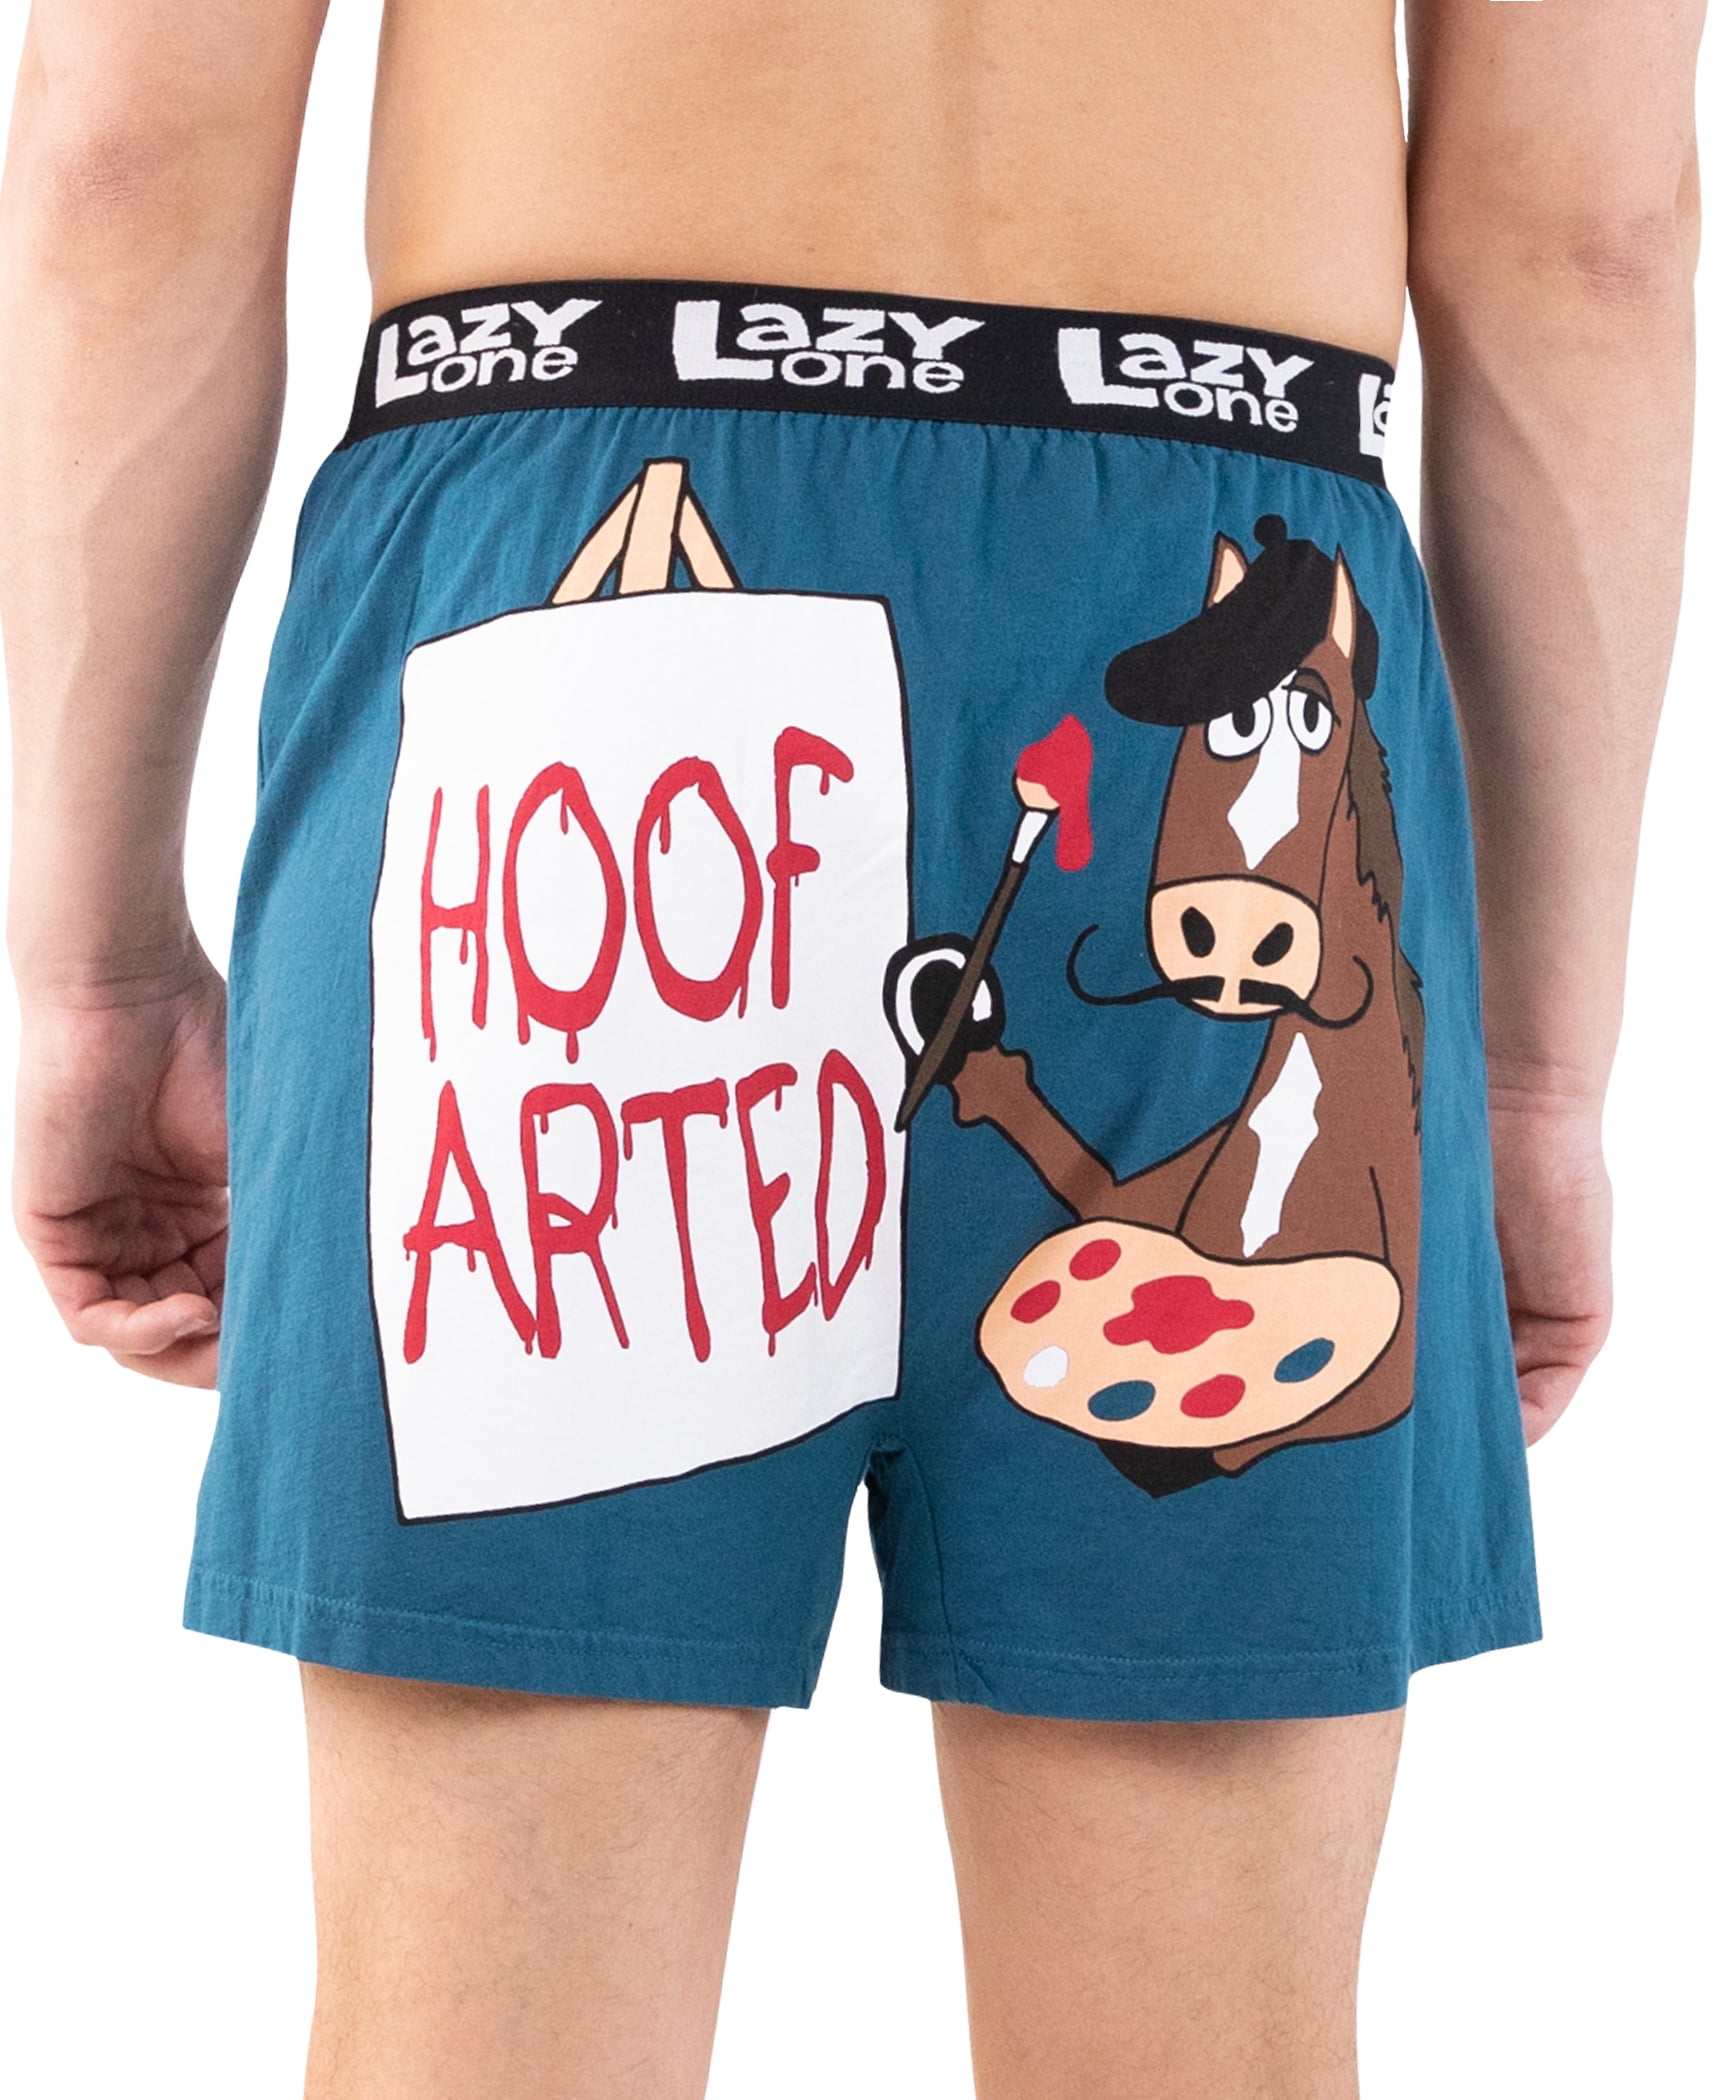 LazyOne Funny Animal Boxers, Hoof Arted, Humorous Underwear, Gag Gifts ...